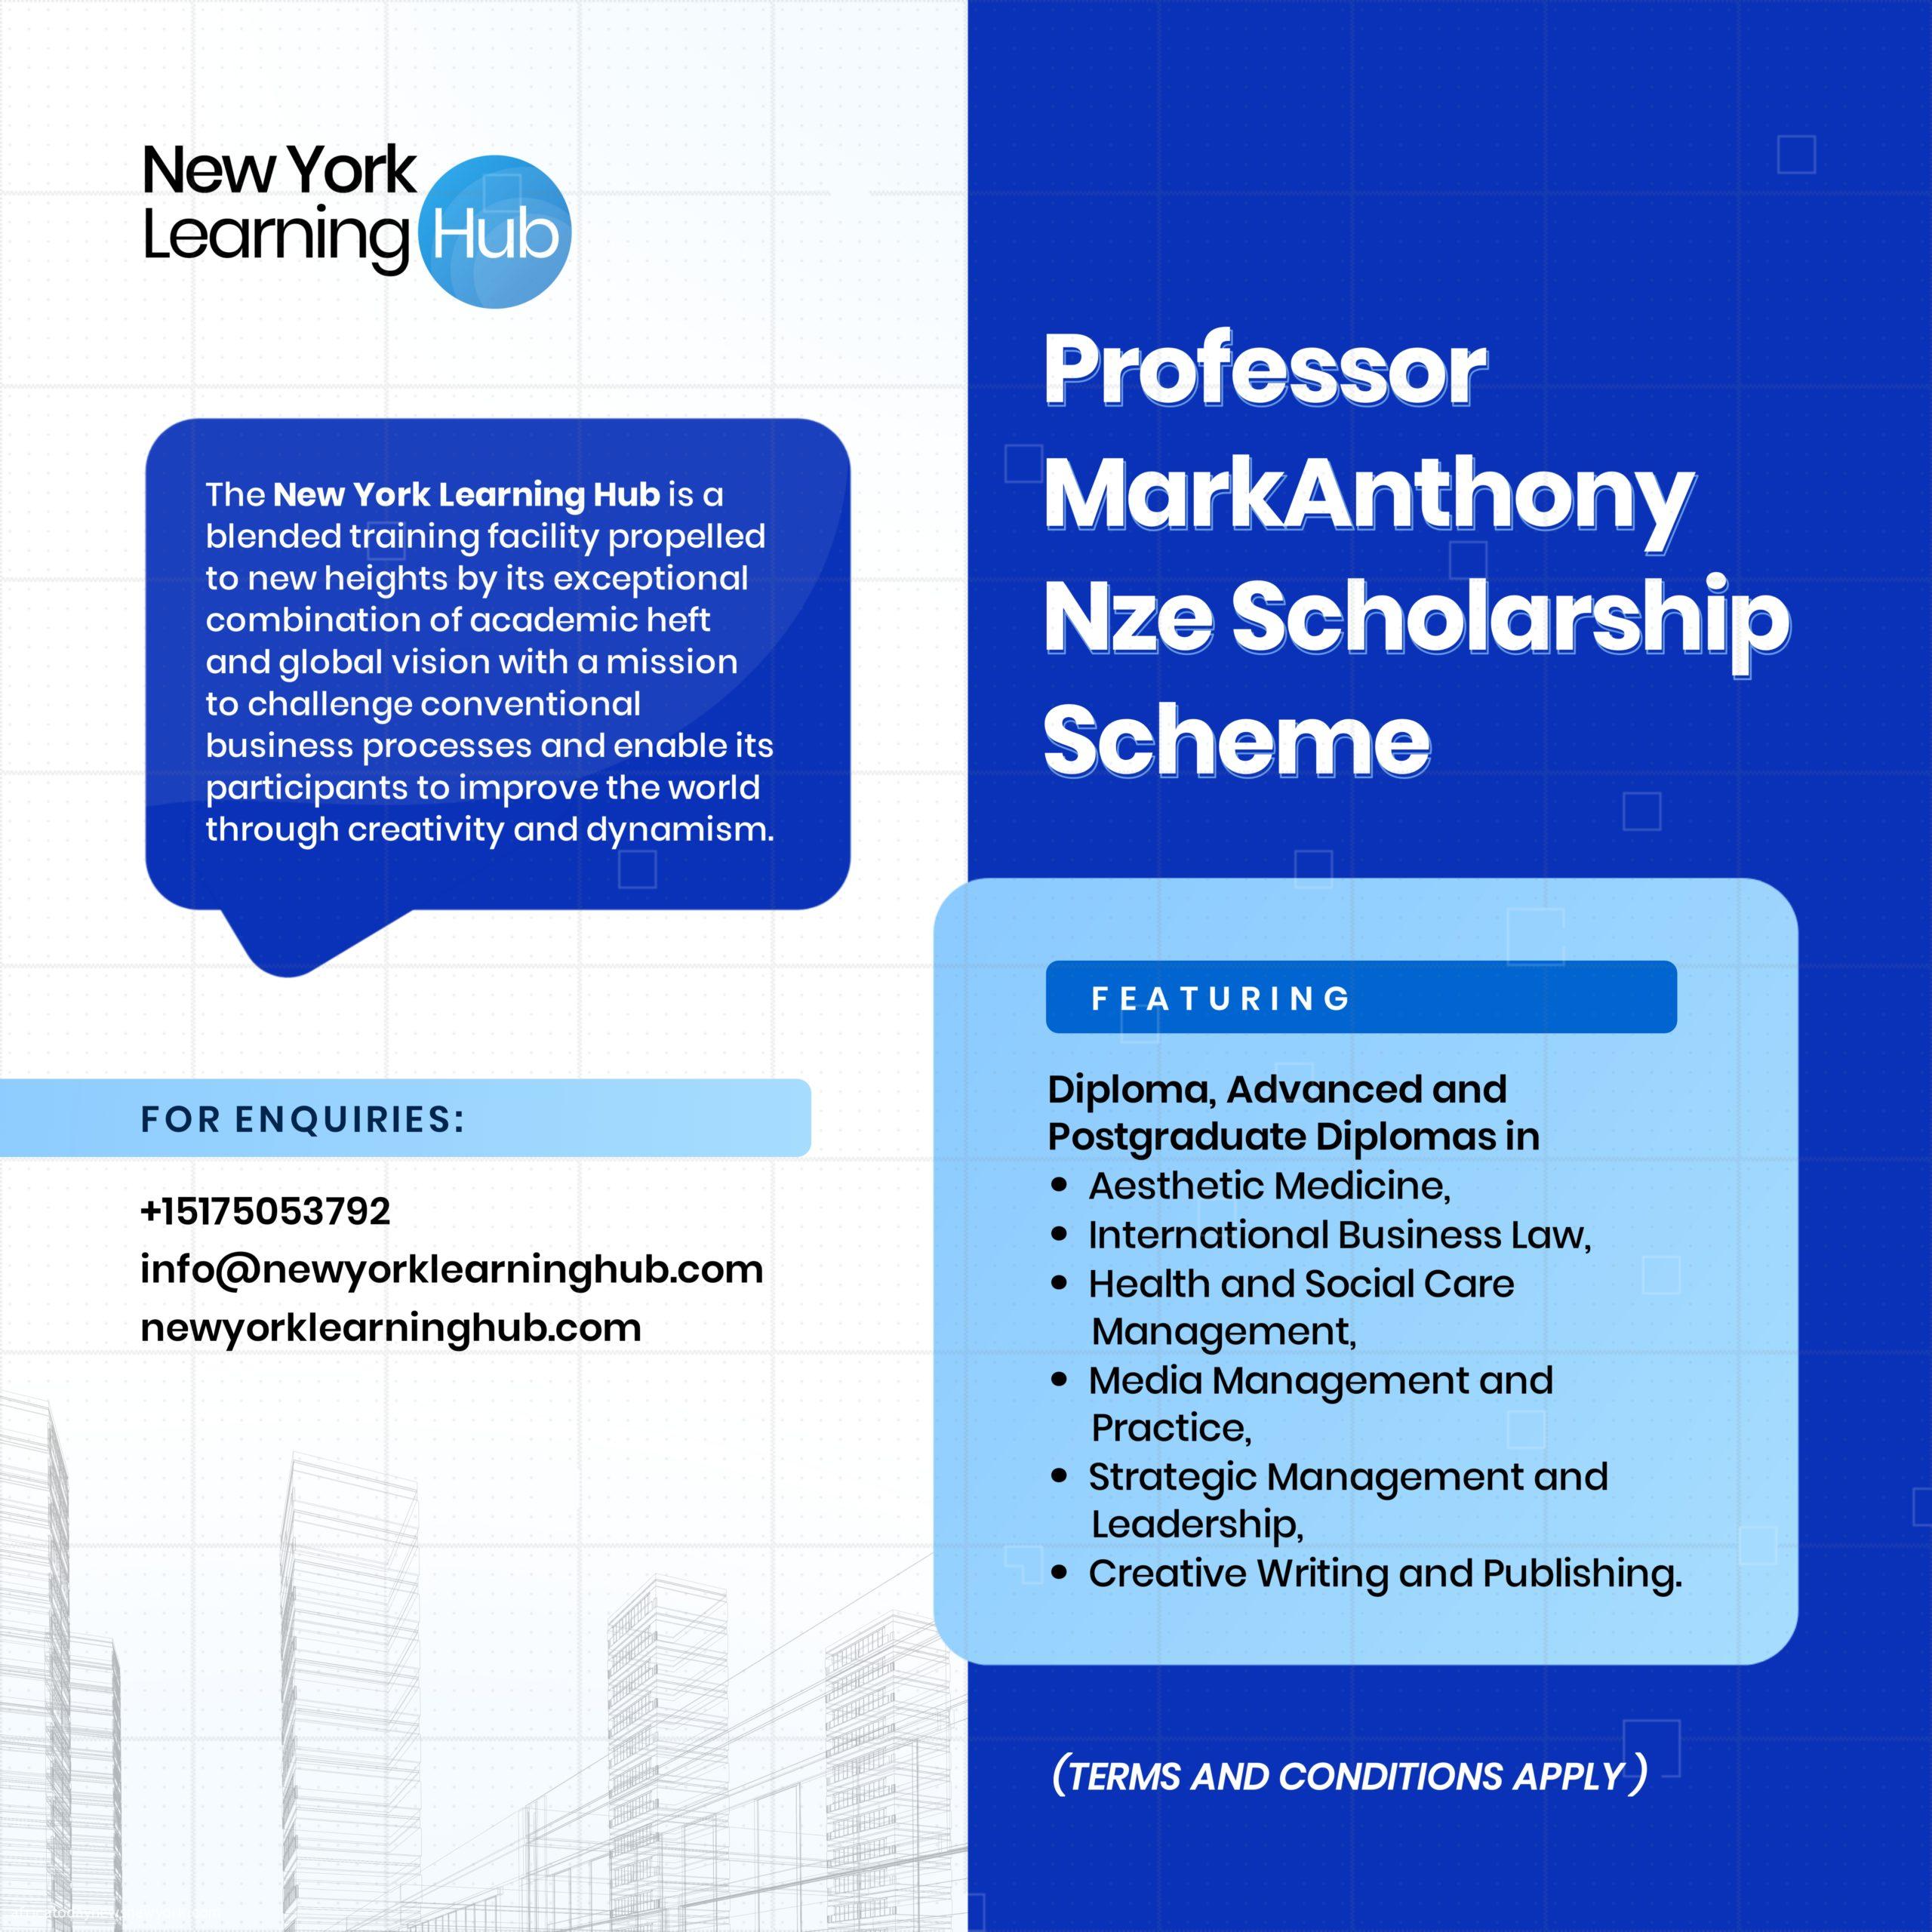 Prof. MarkAnthony Nze Scholarship At New York Learning Hub